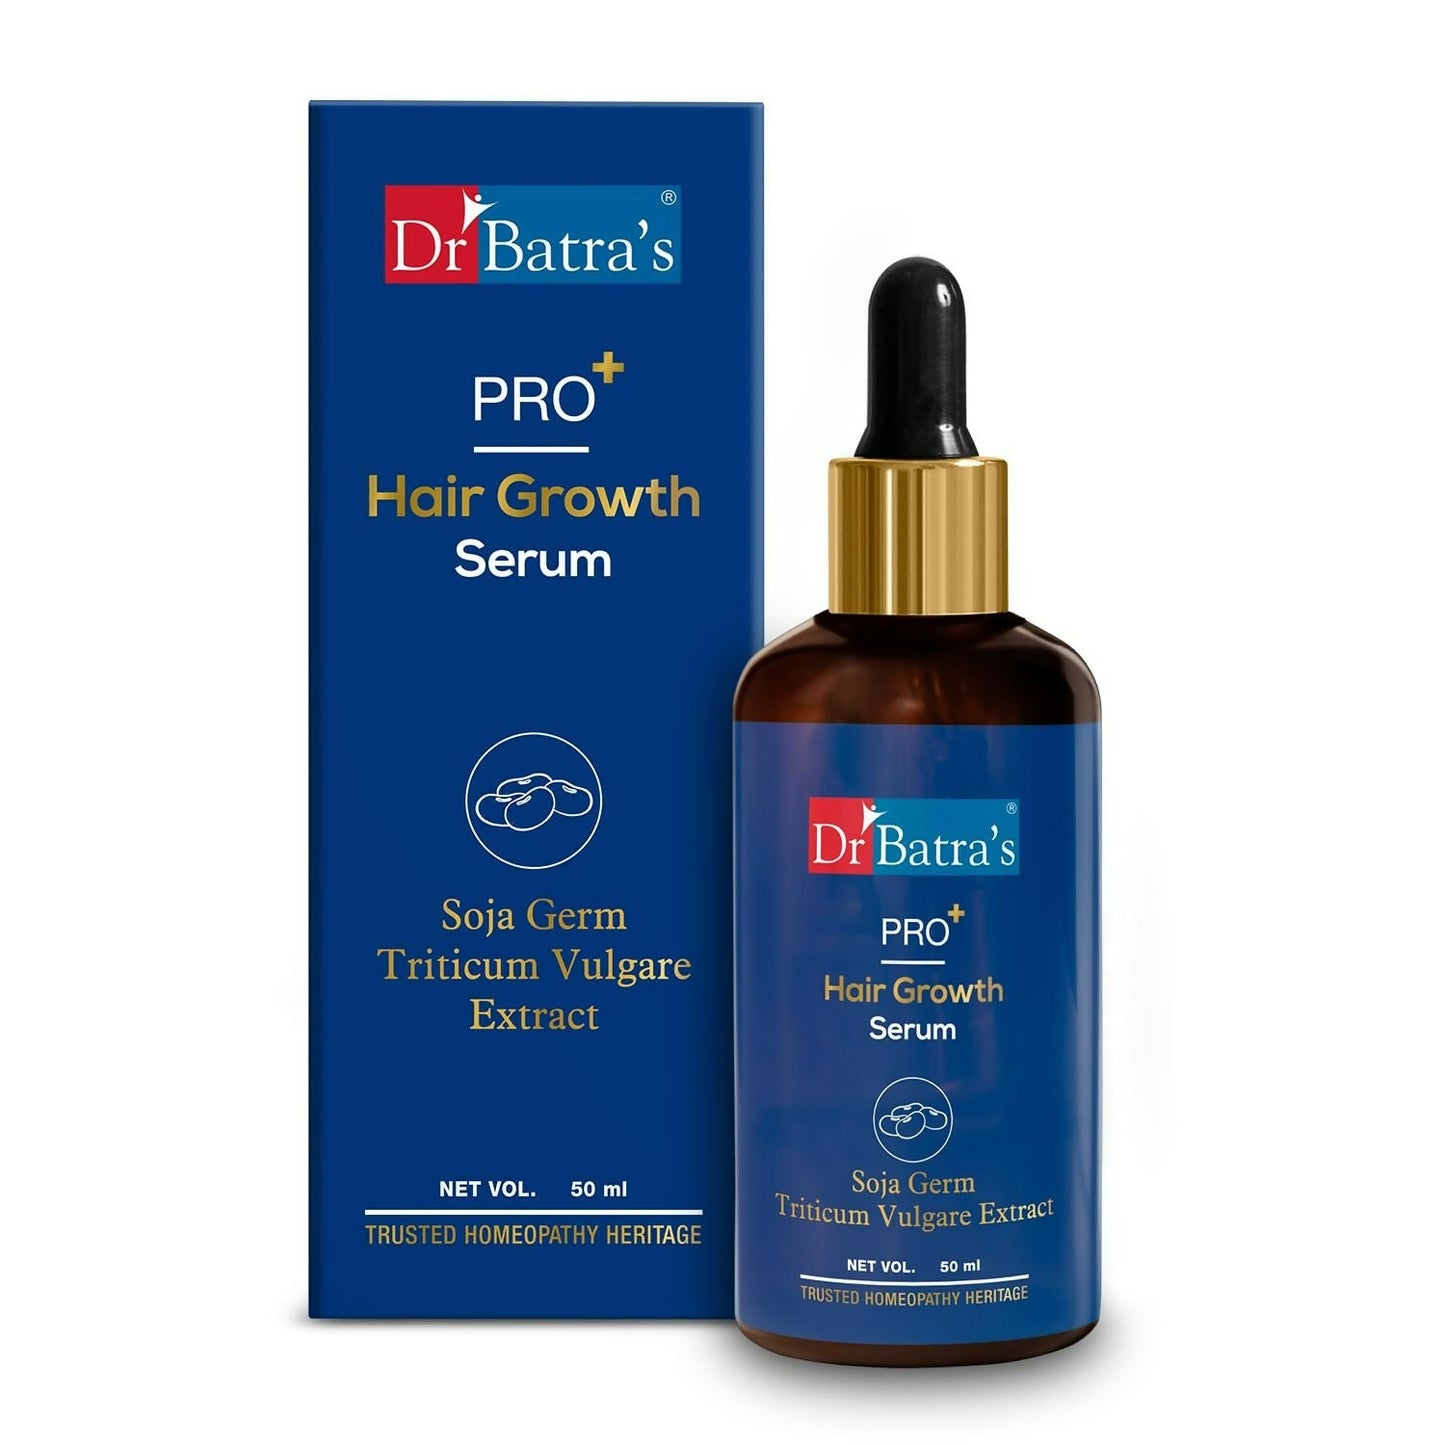 Dr. Batra's Pro+ Hair Growth Serum